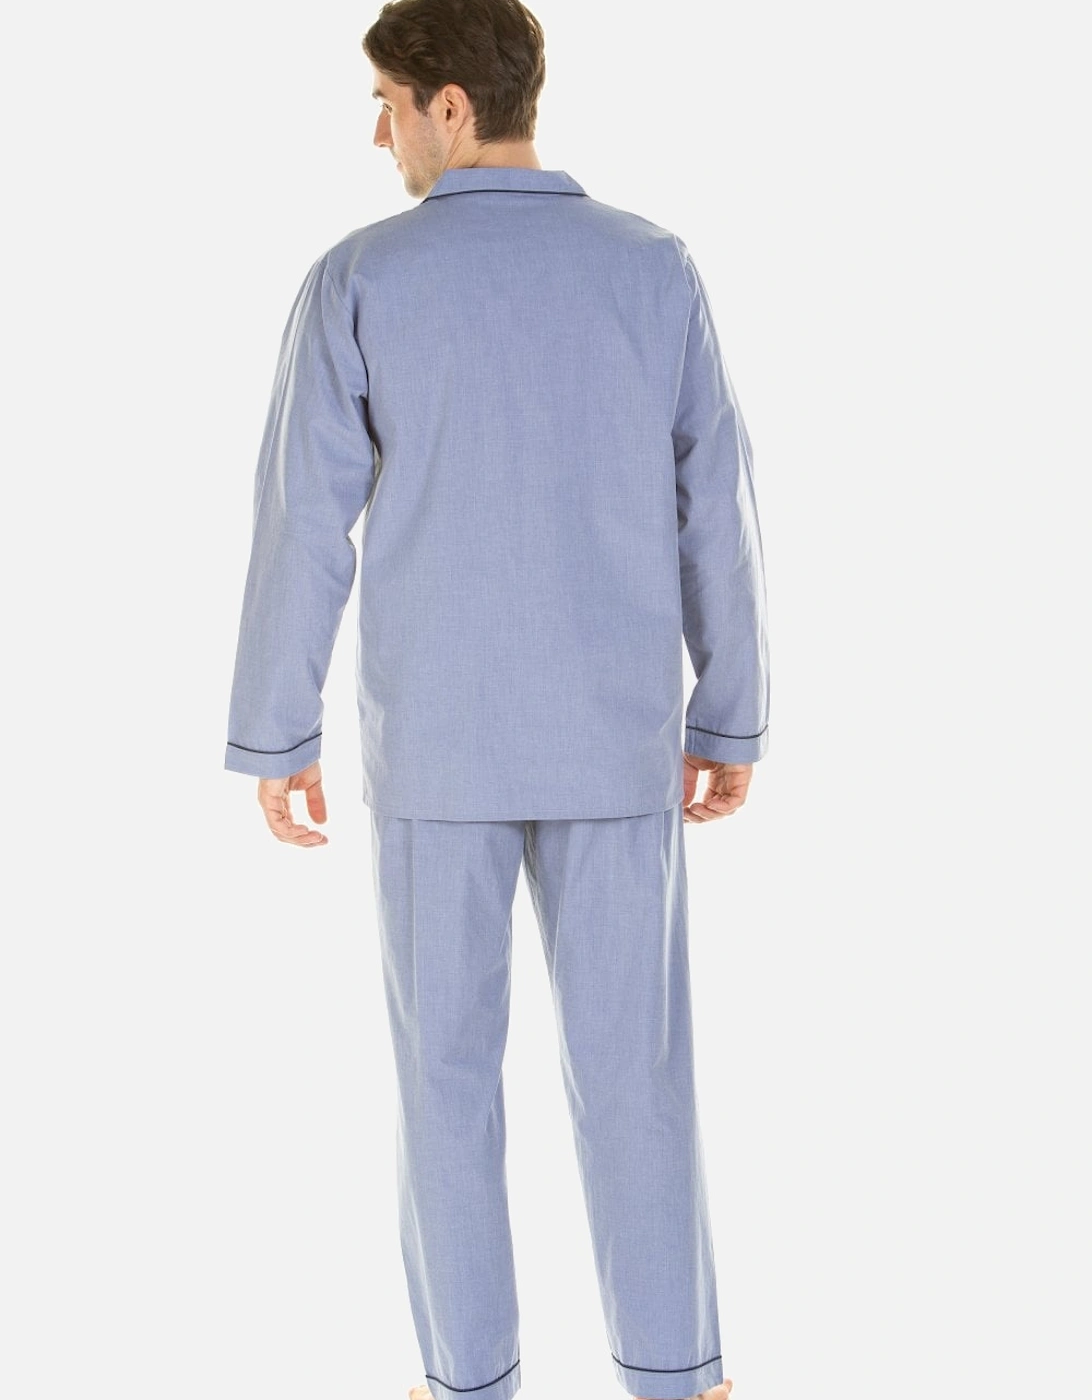 Classic Mens Marl Effect Full Length Easycare Blue Pyjama Sets